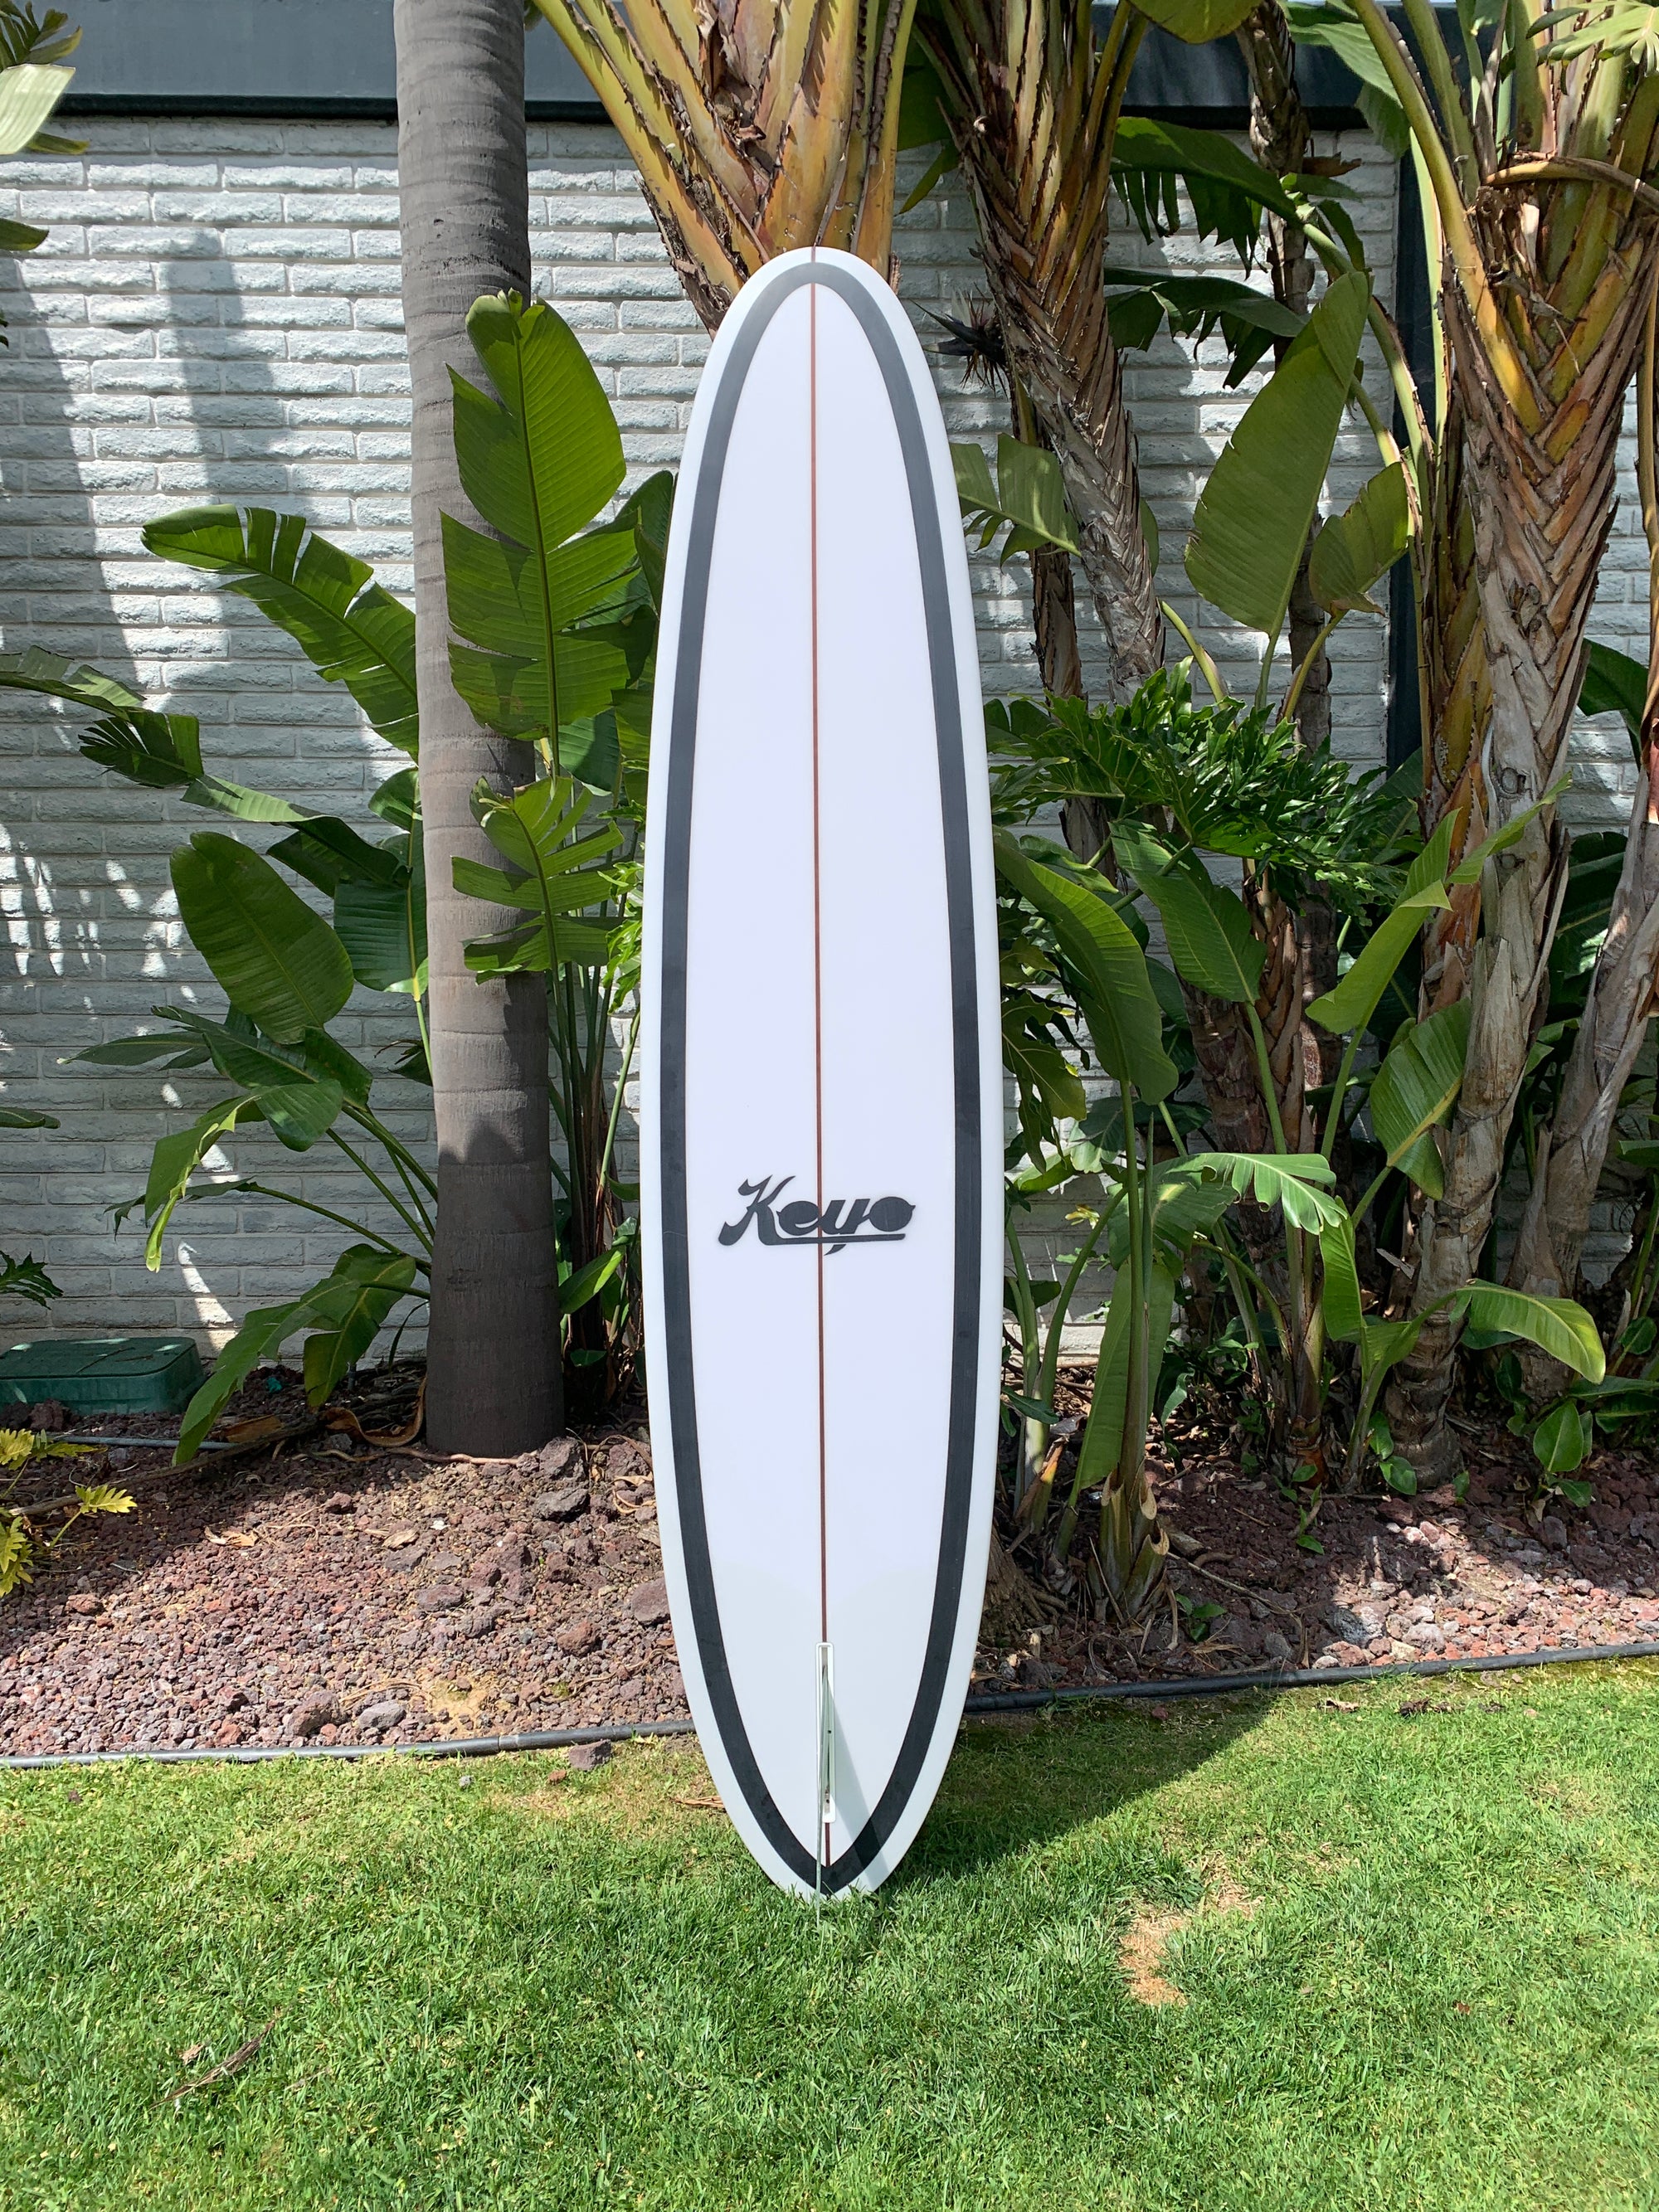 Keyo 8'0" Evo Surfboard